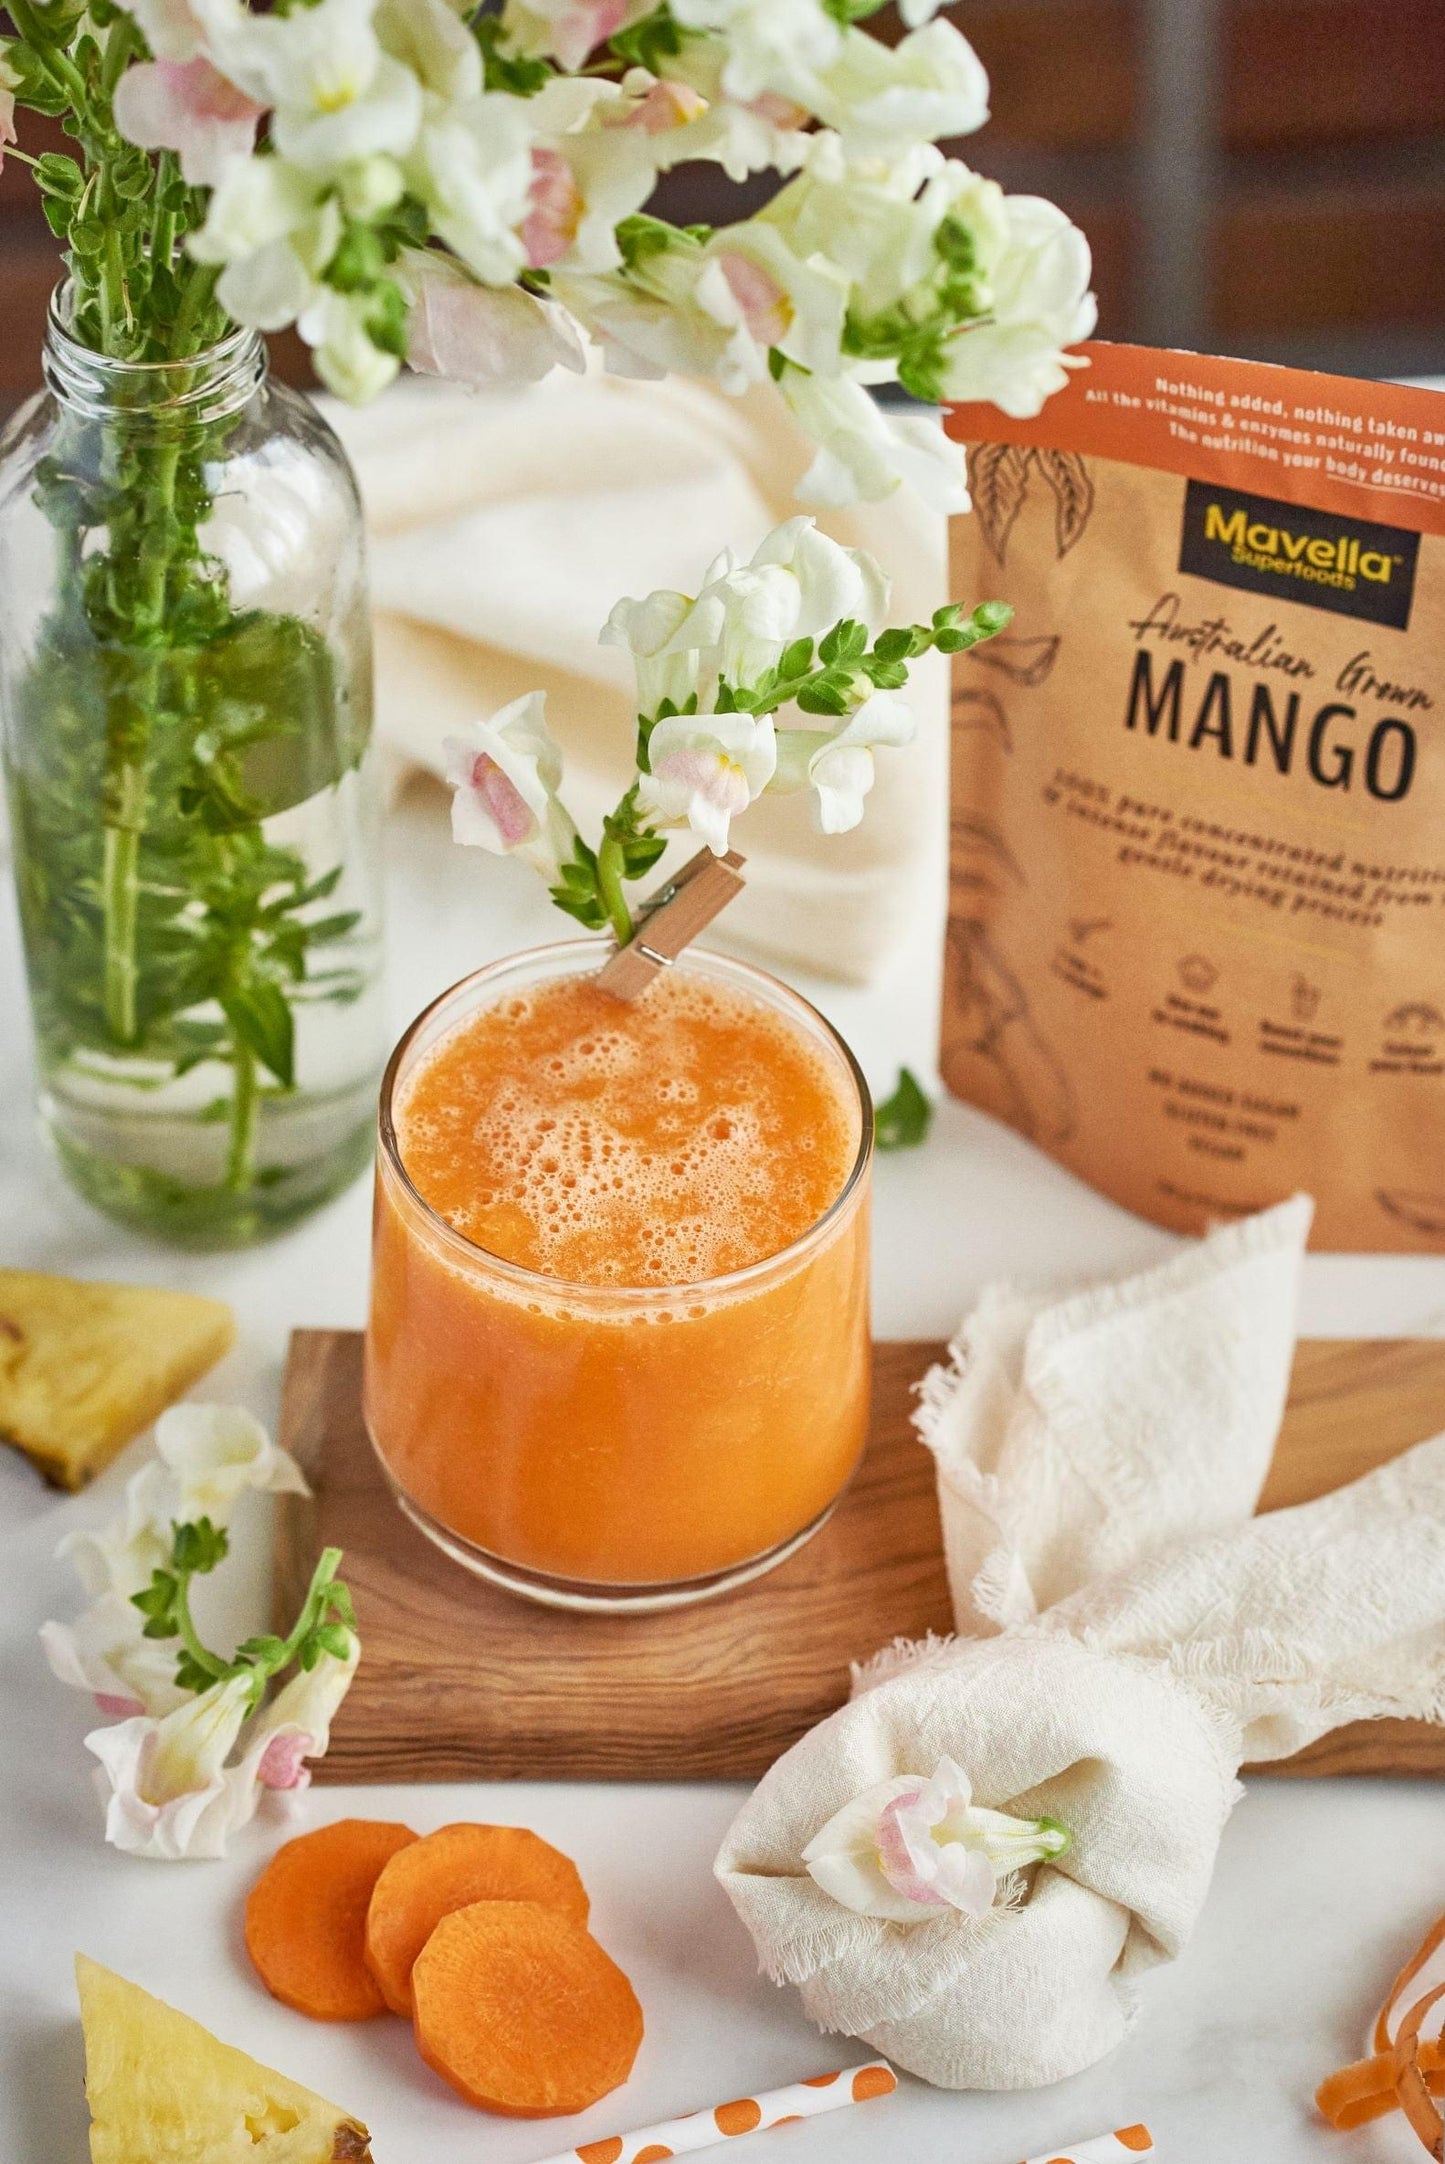 Mango Superfood powder with Prebiotic Fibre 100g